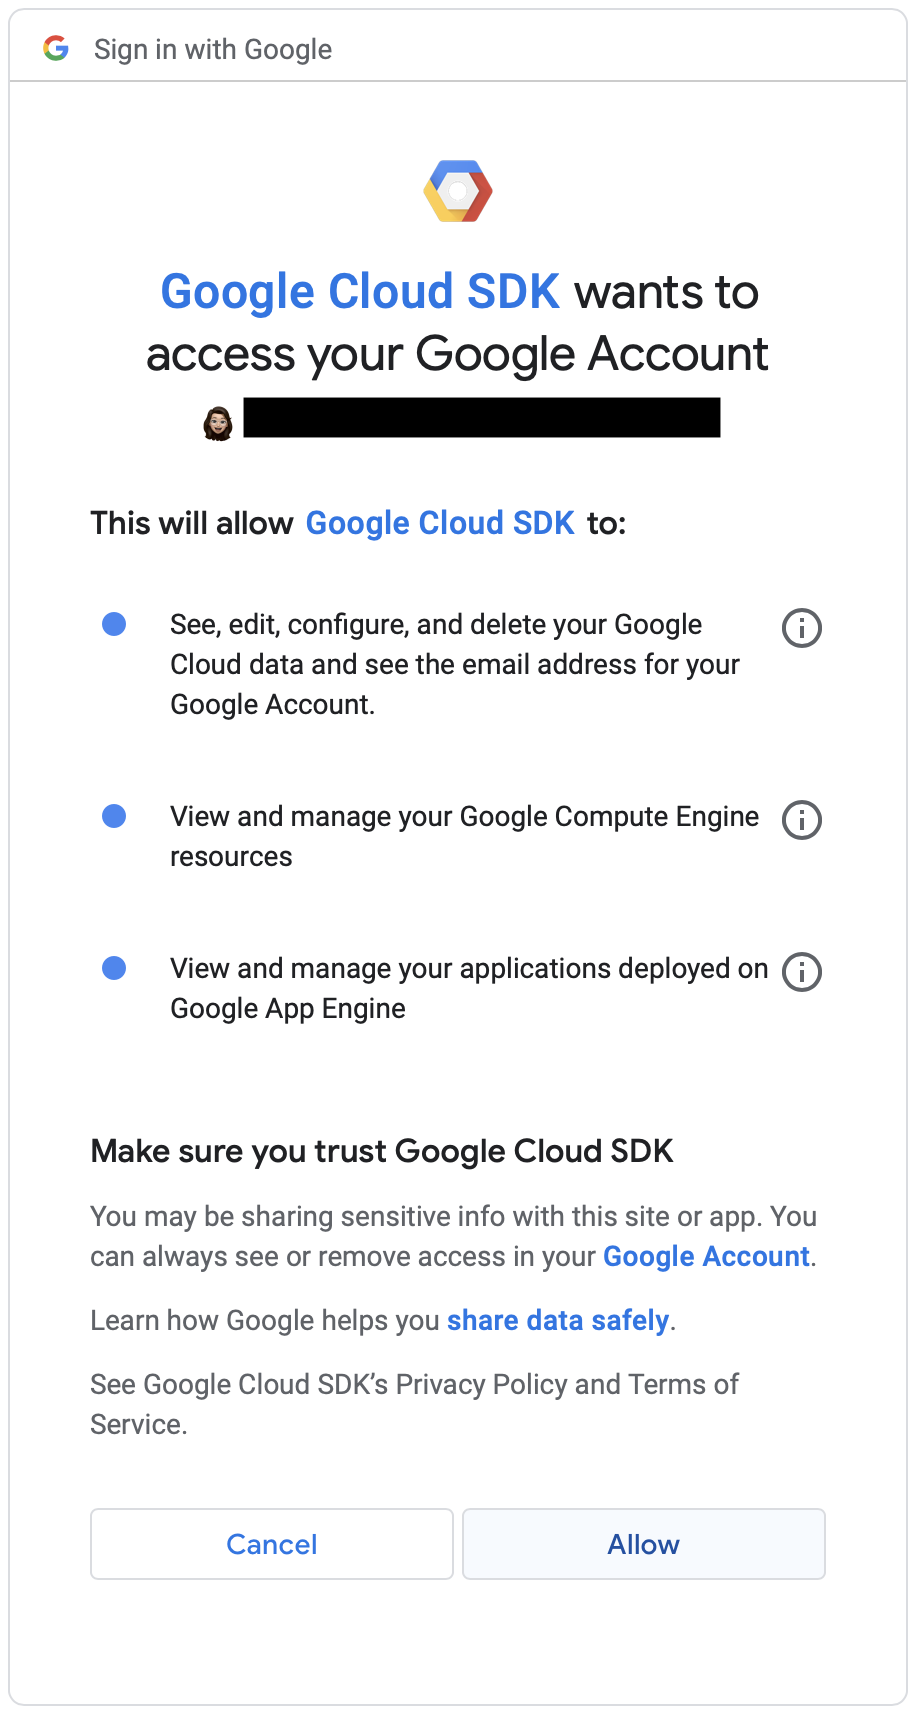 Grant access for Google Cloud SDK